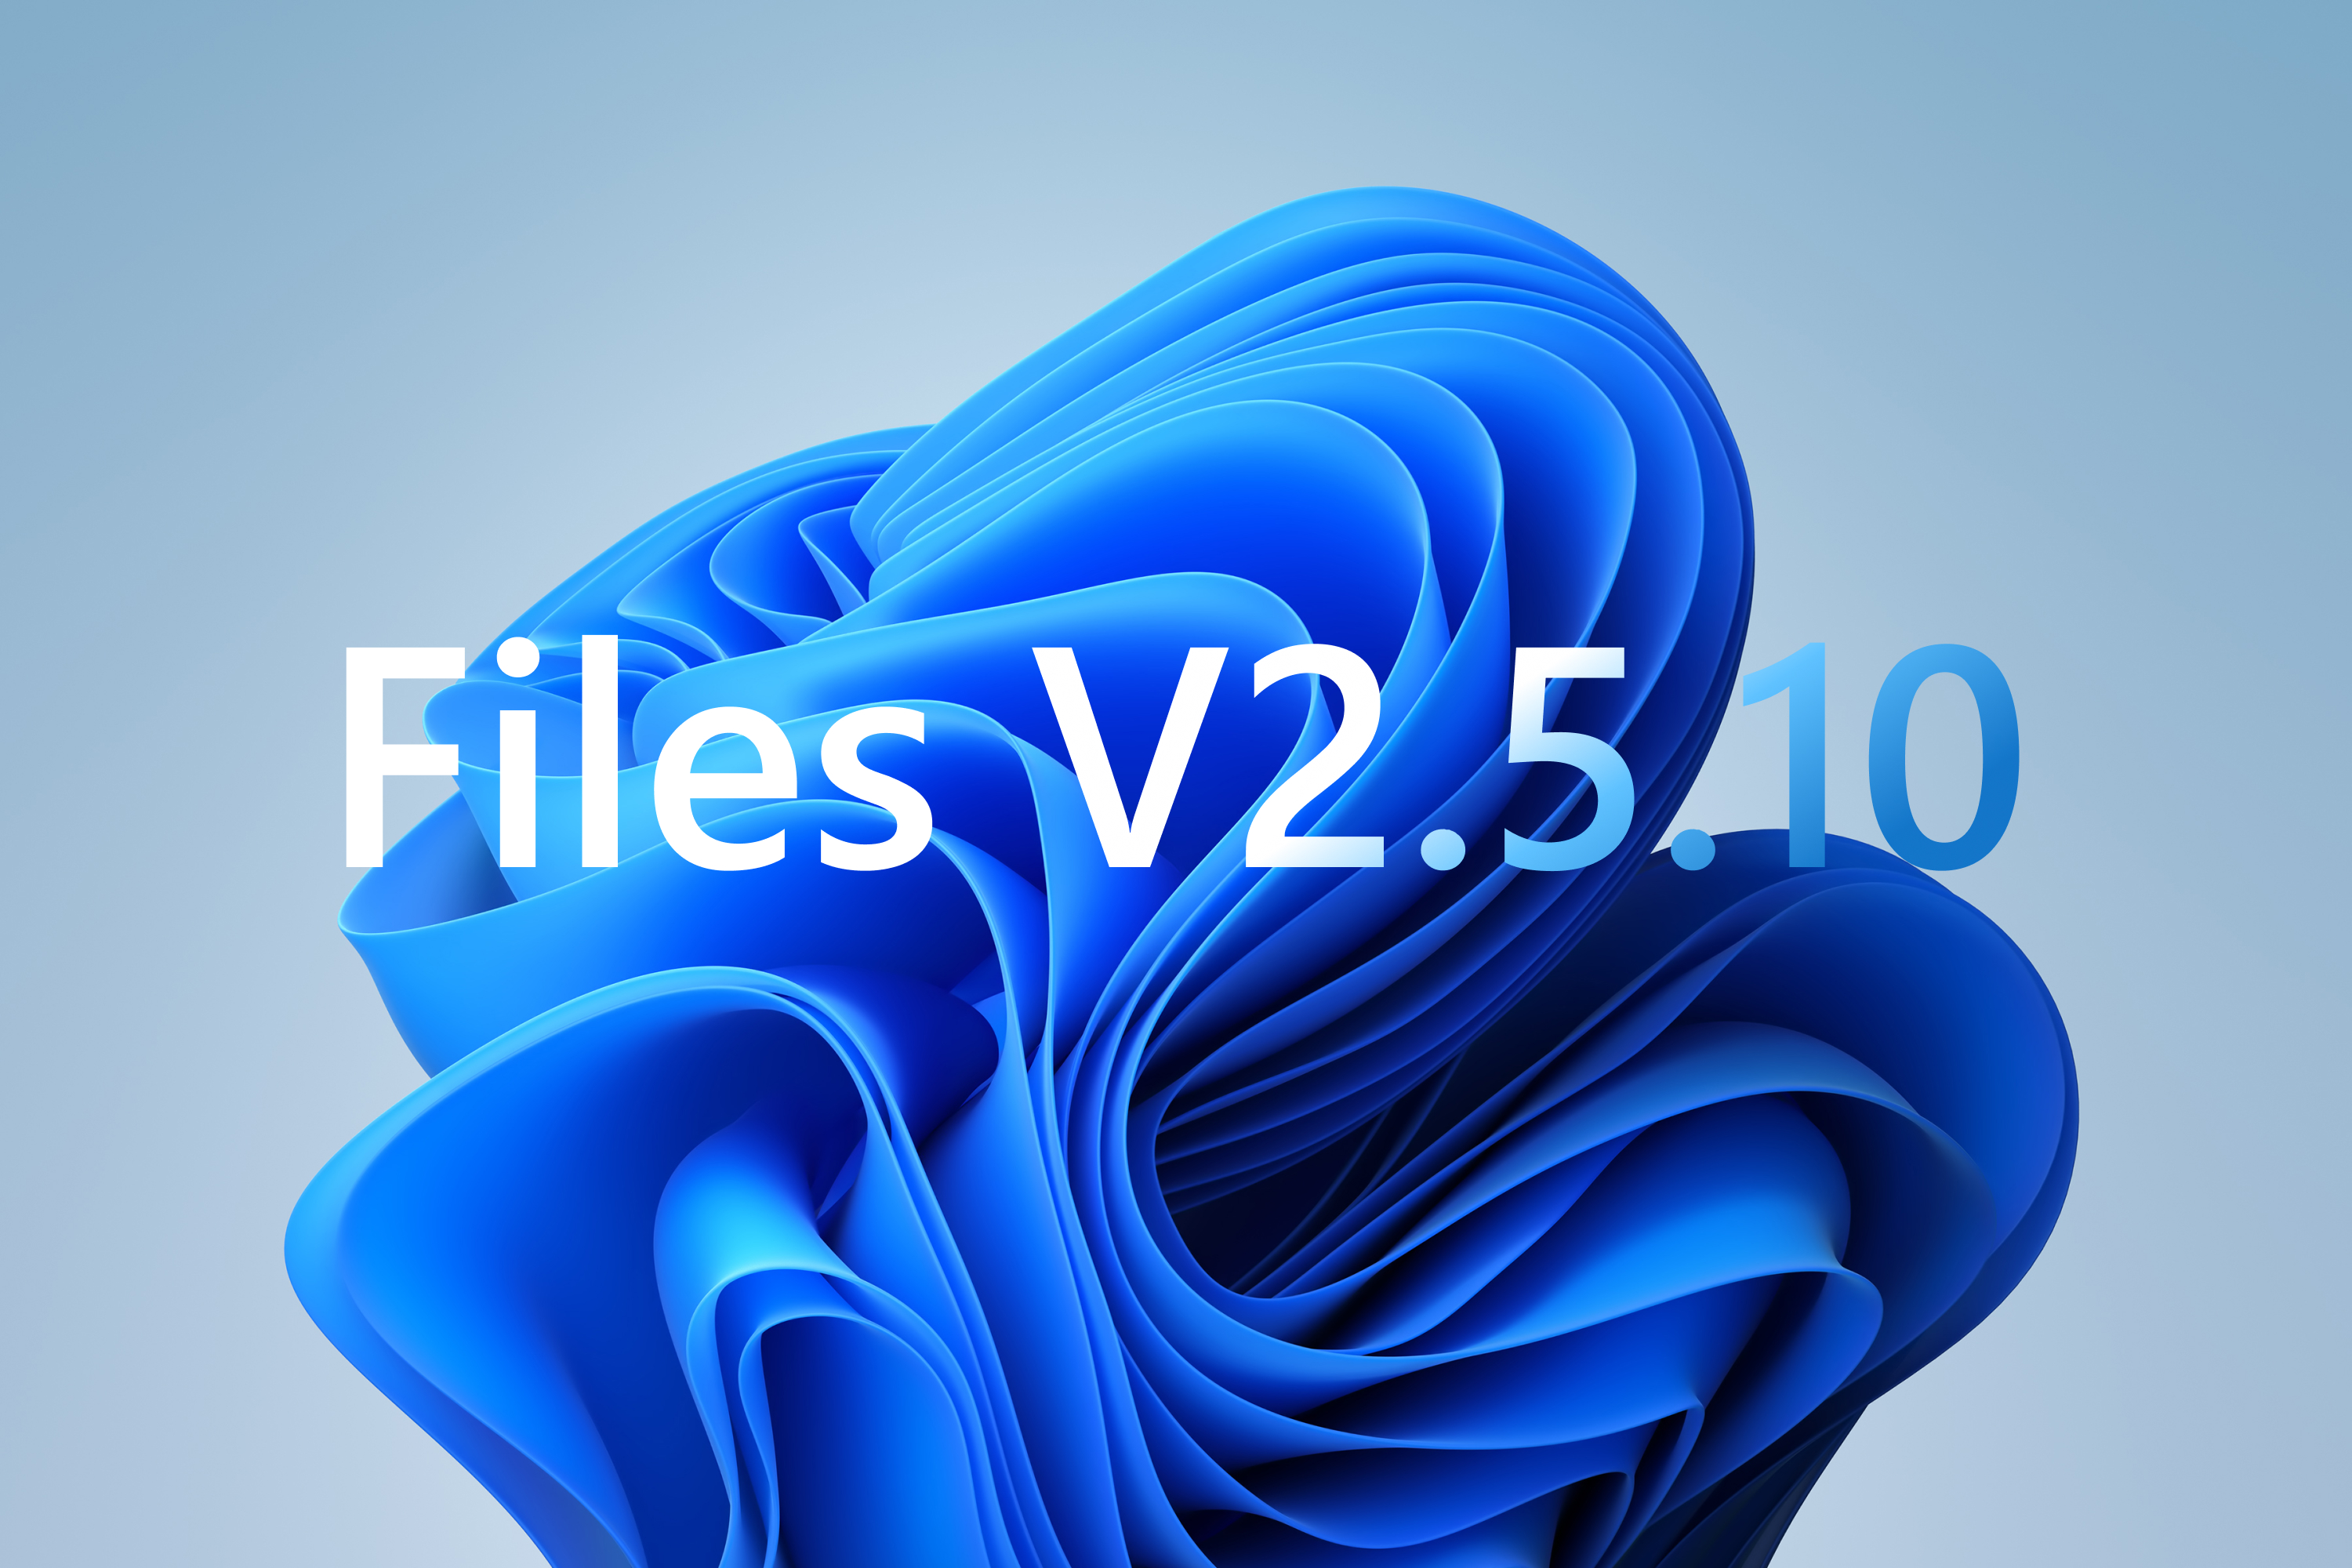 Announcing Files, version 2.5.10 thumbnail